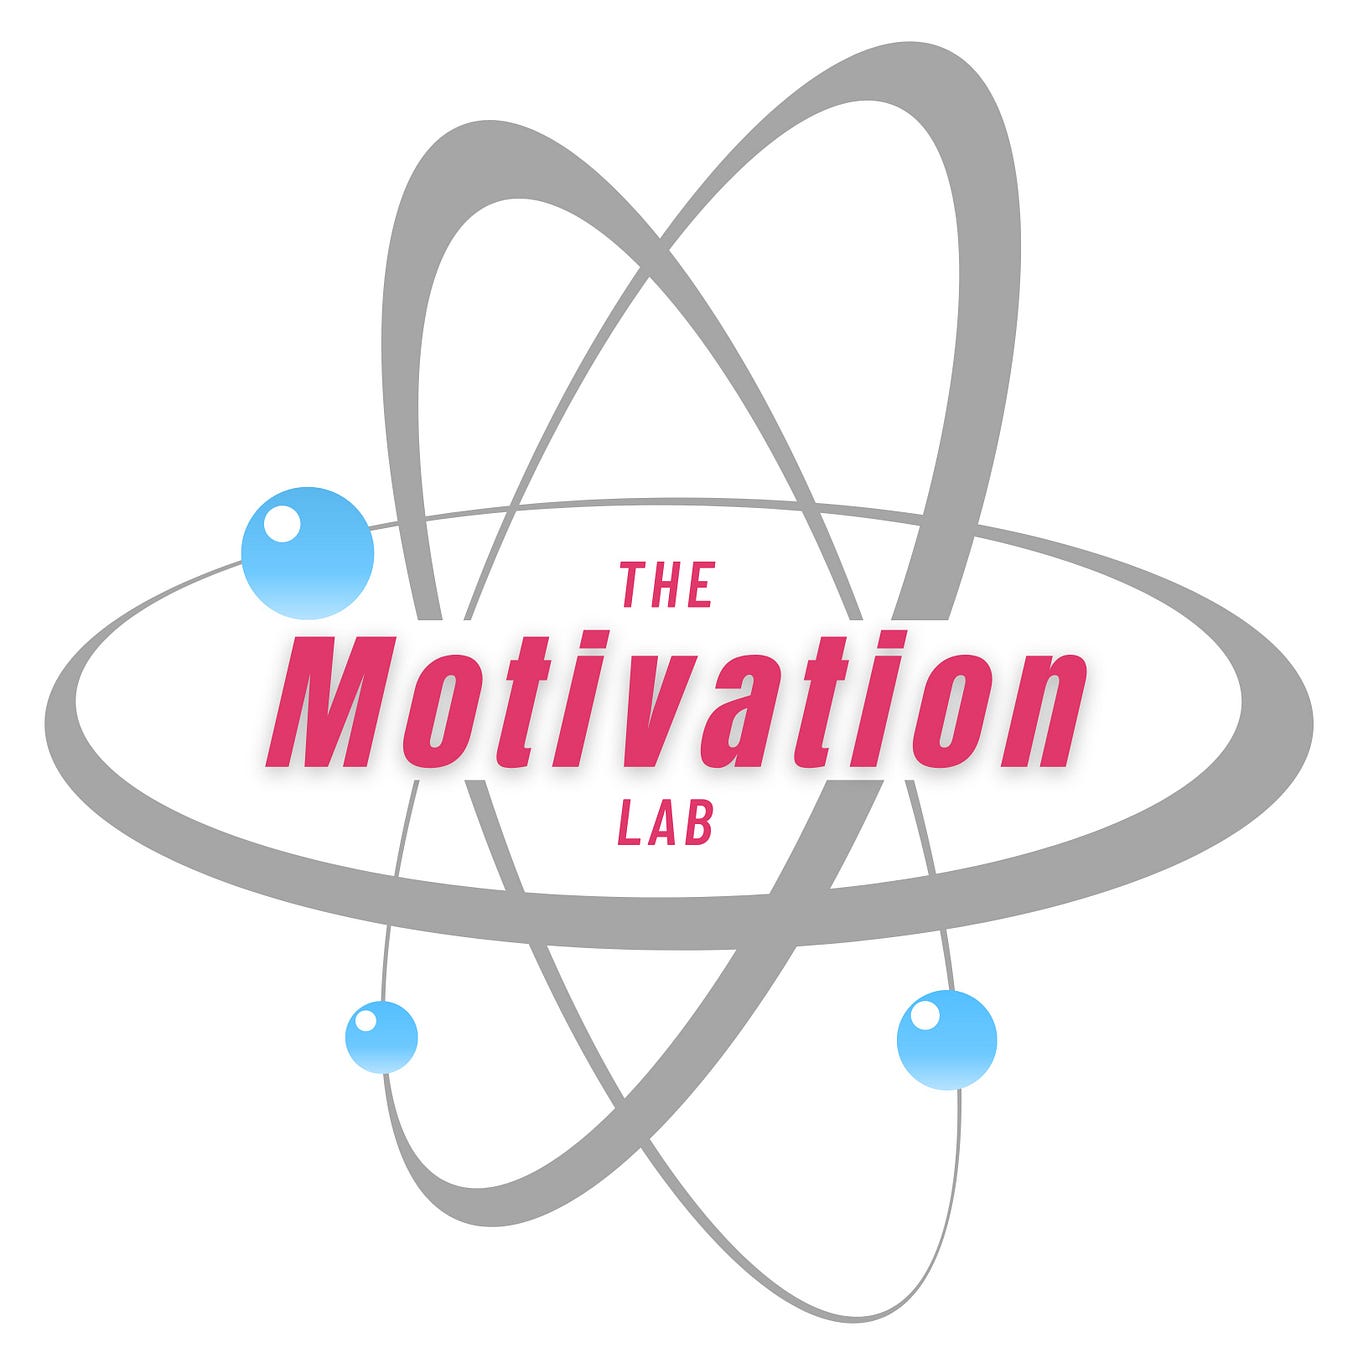 The Motivation Lab